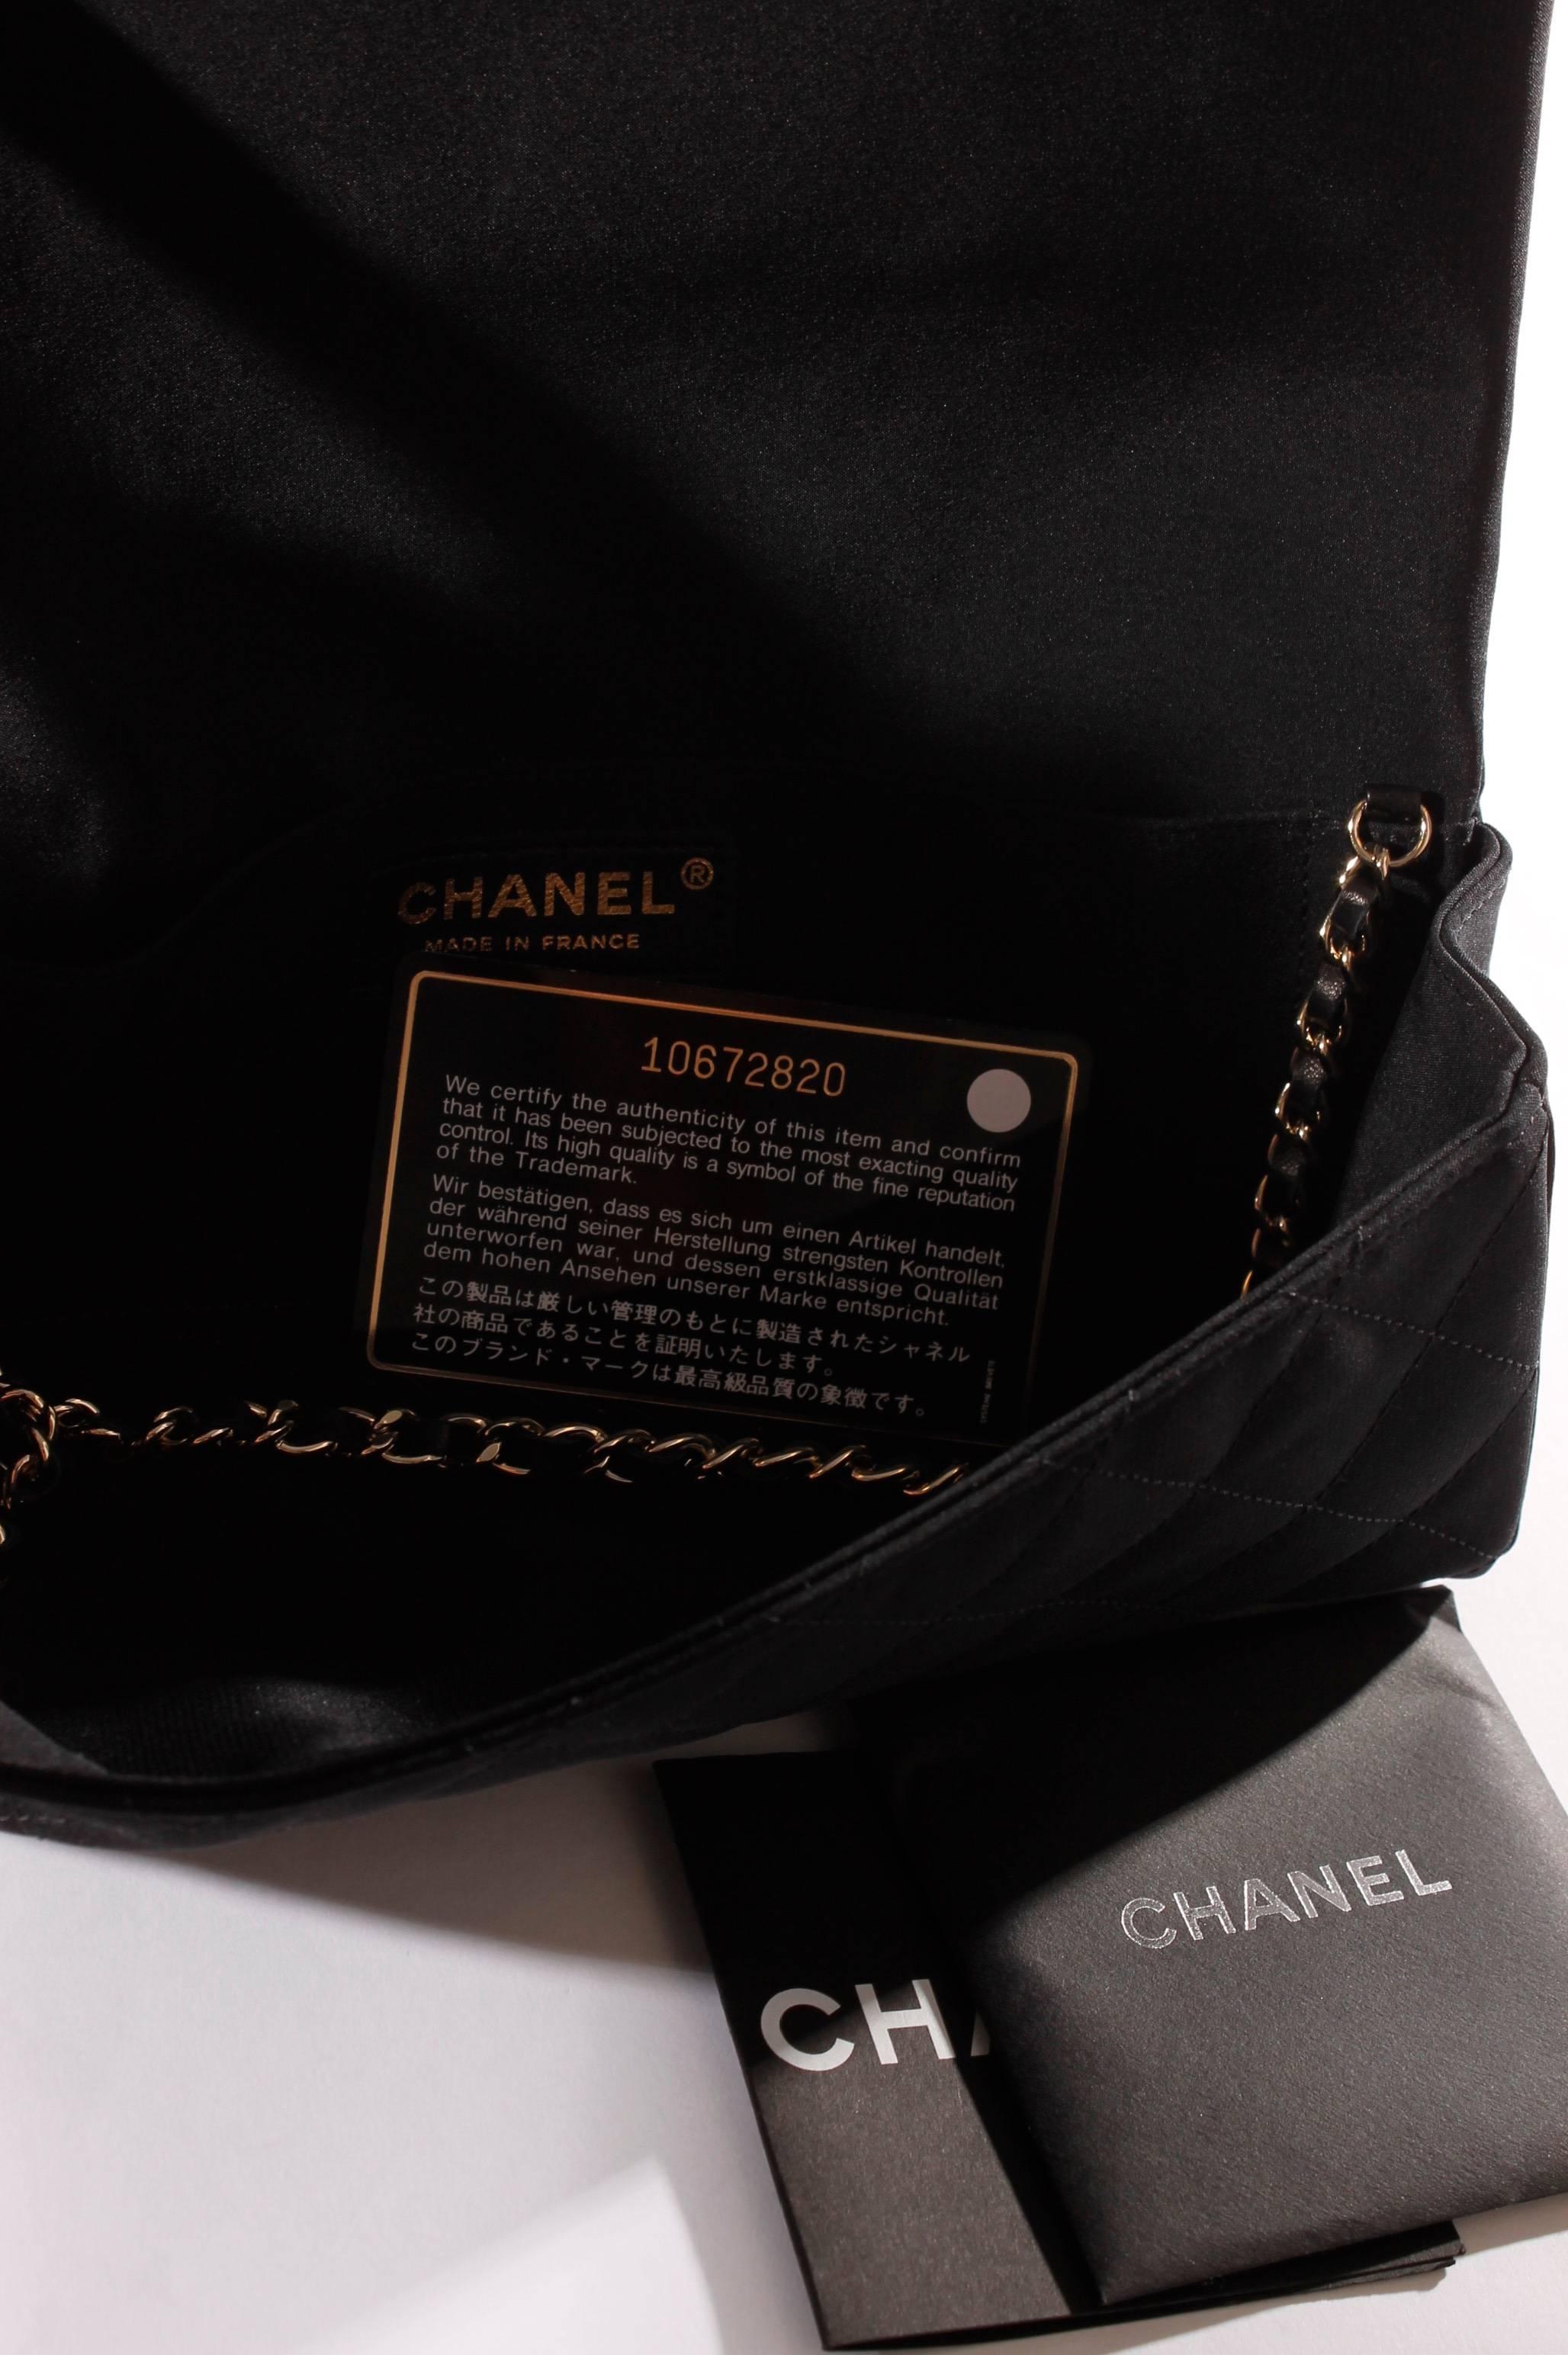 Chanel Satin Camellia Clutch Bag - black/white/silver For Sale 2